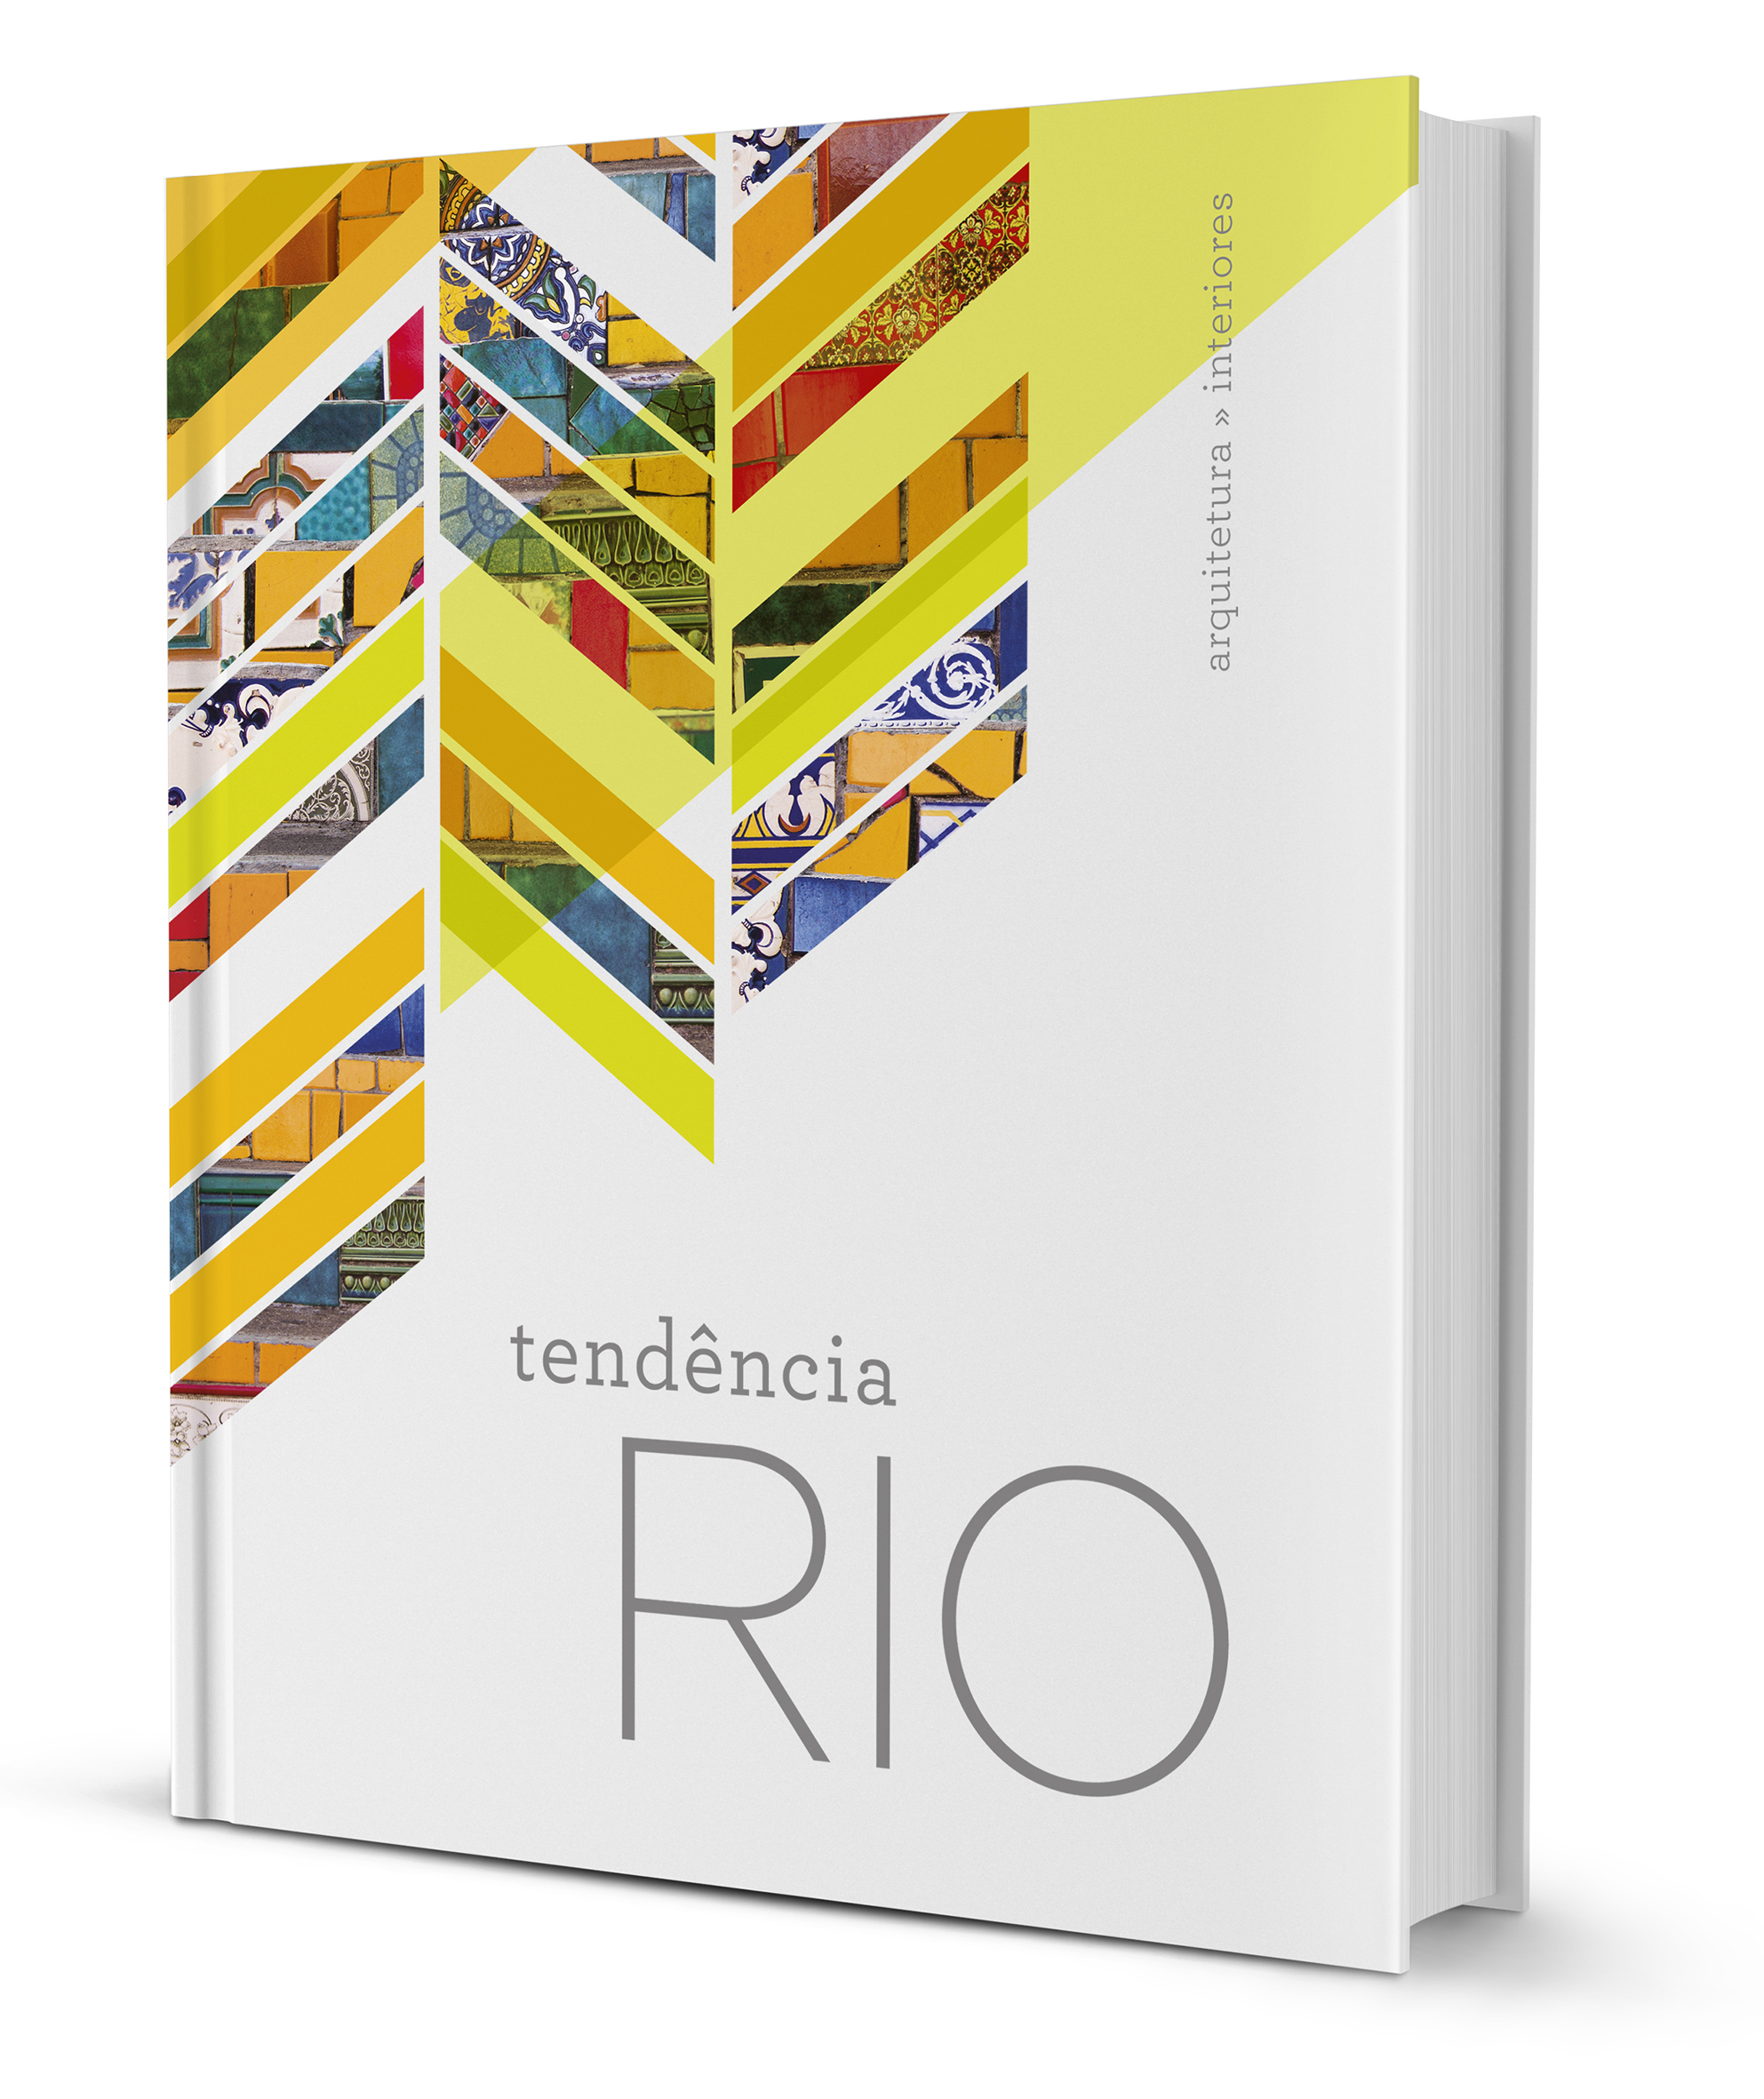 Entrevistamos Renato Tomasi, produtor do livro Tendência Rio